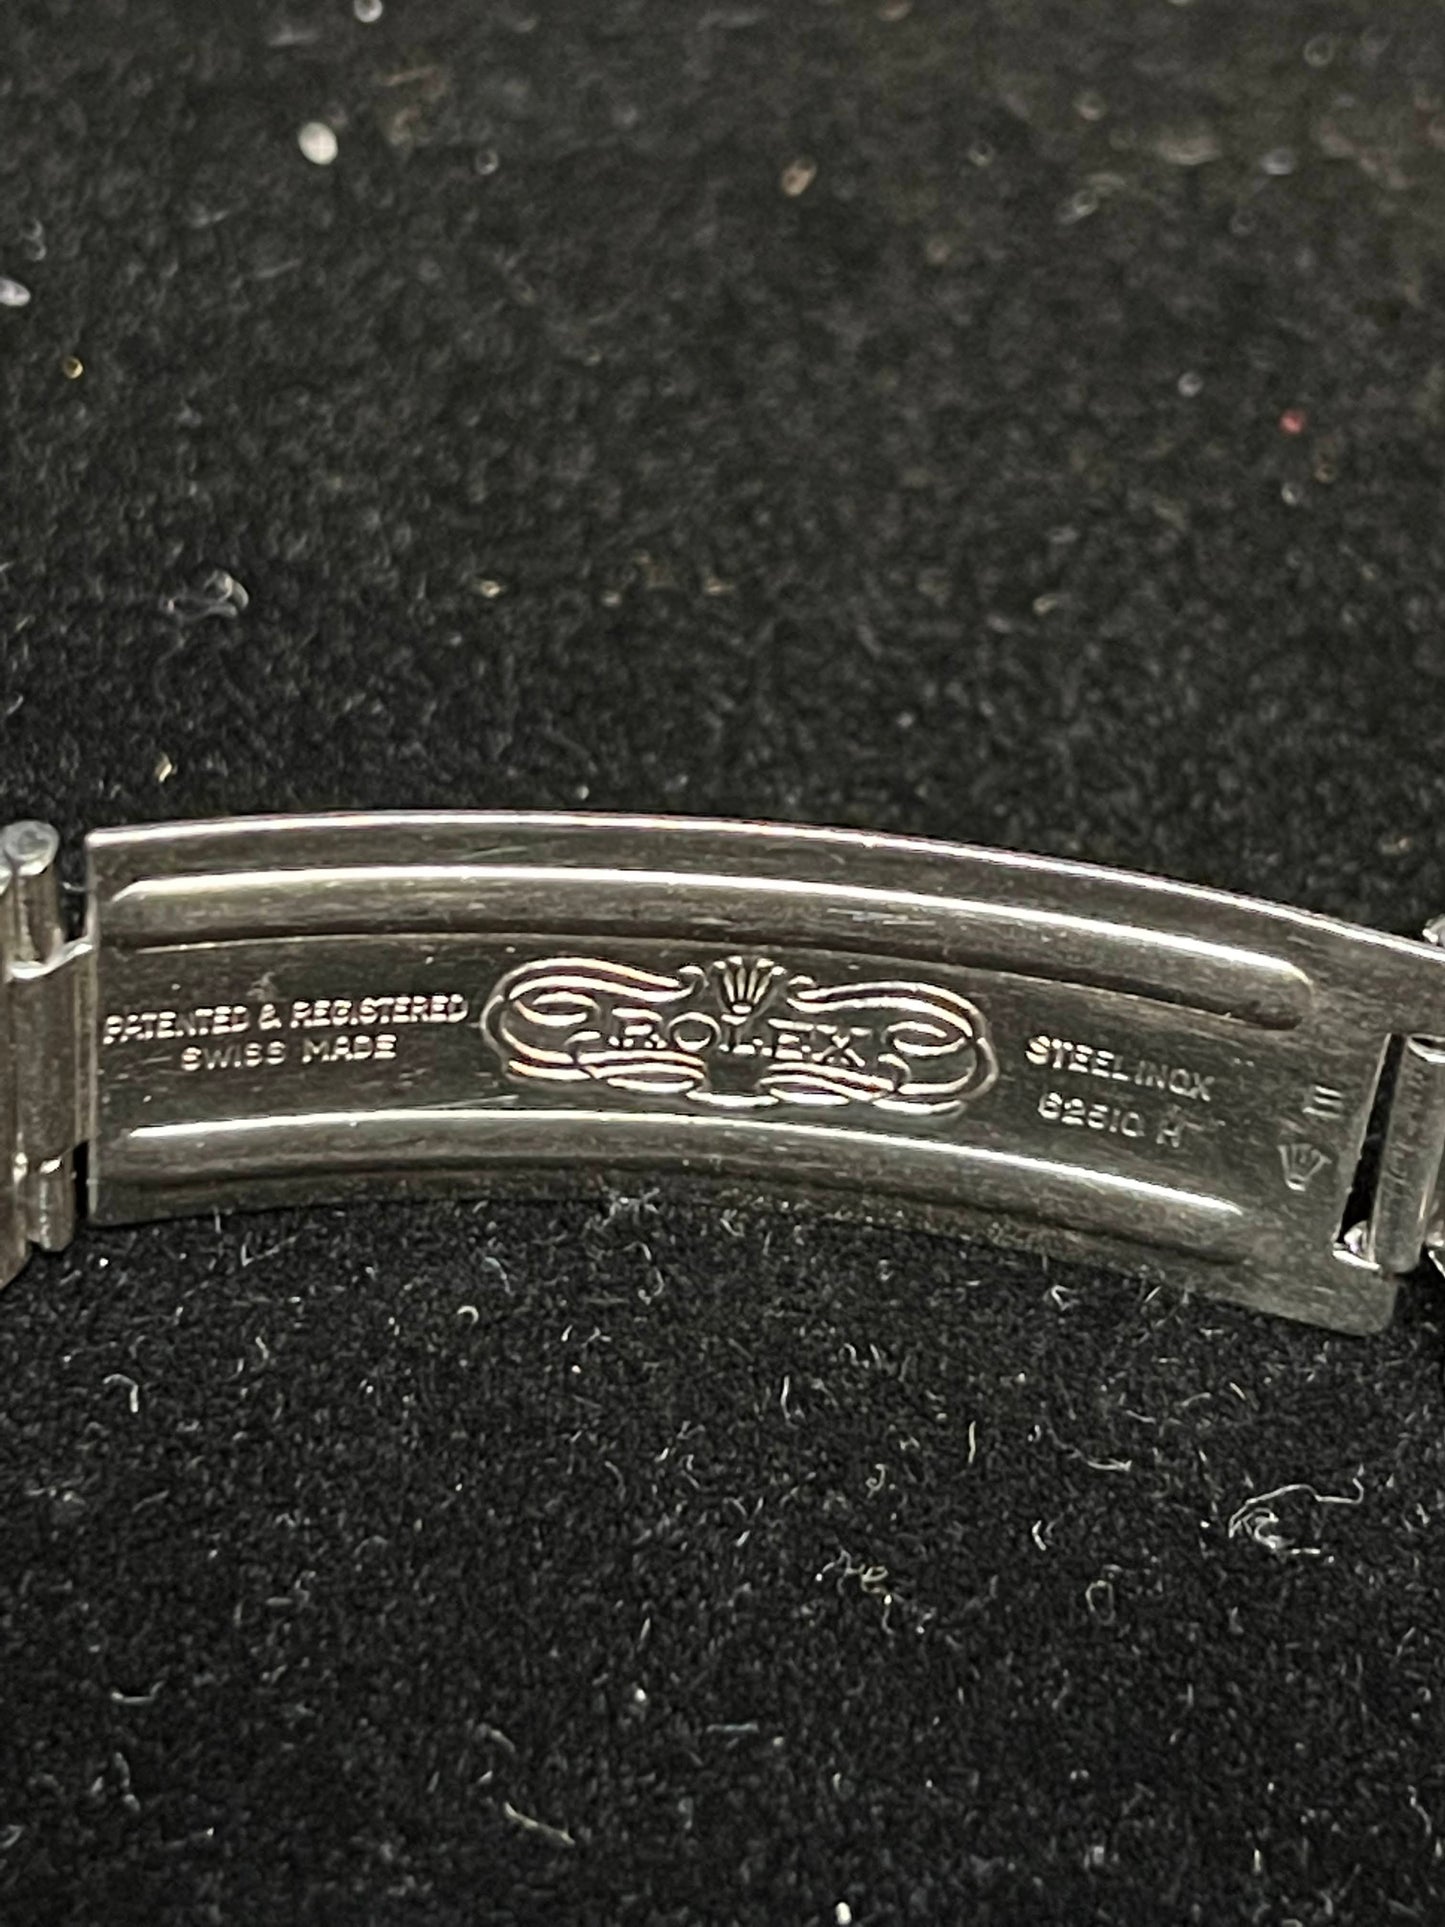 1979 Rolex Datejust 16030 Silver Dial Jubilee Bracelet No Papers 36mm